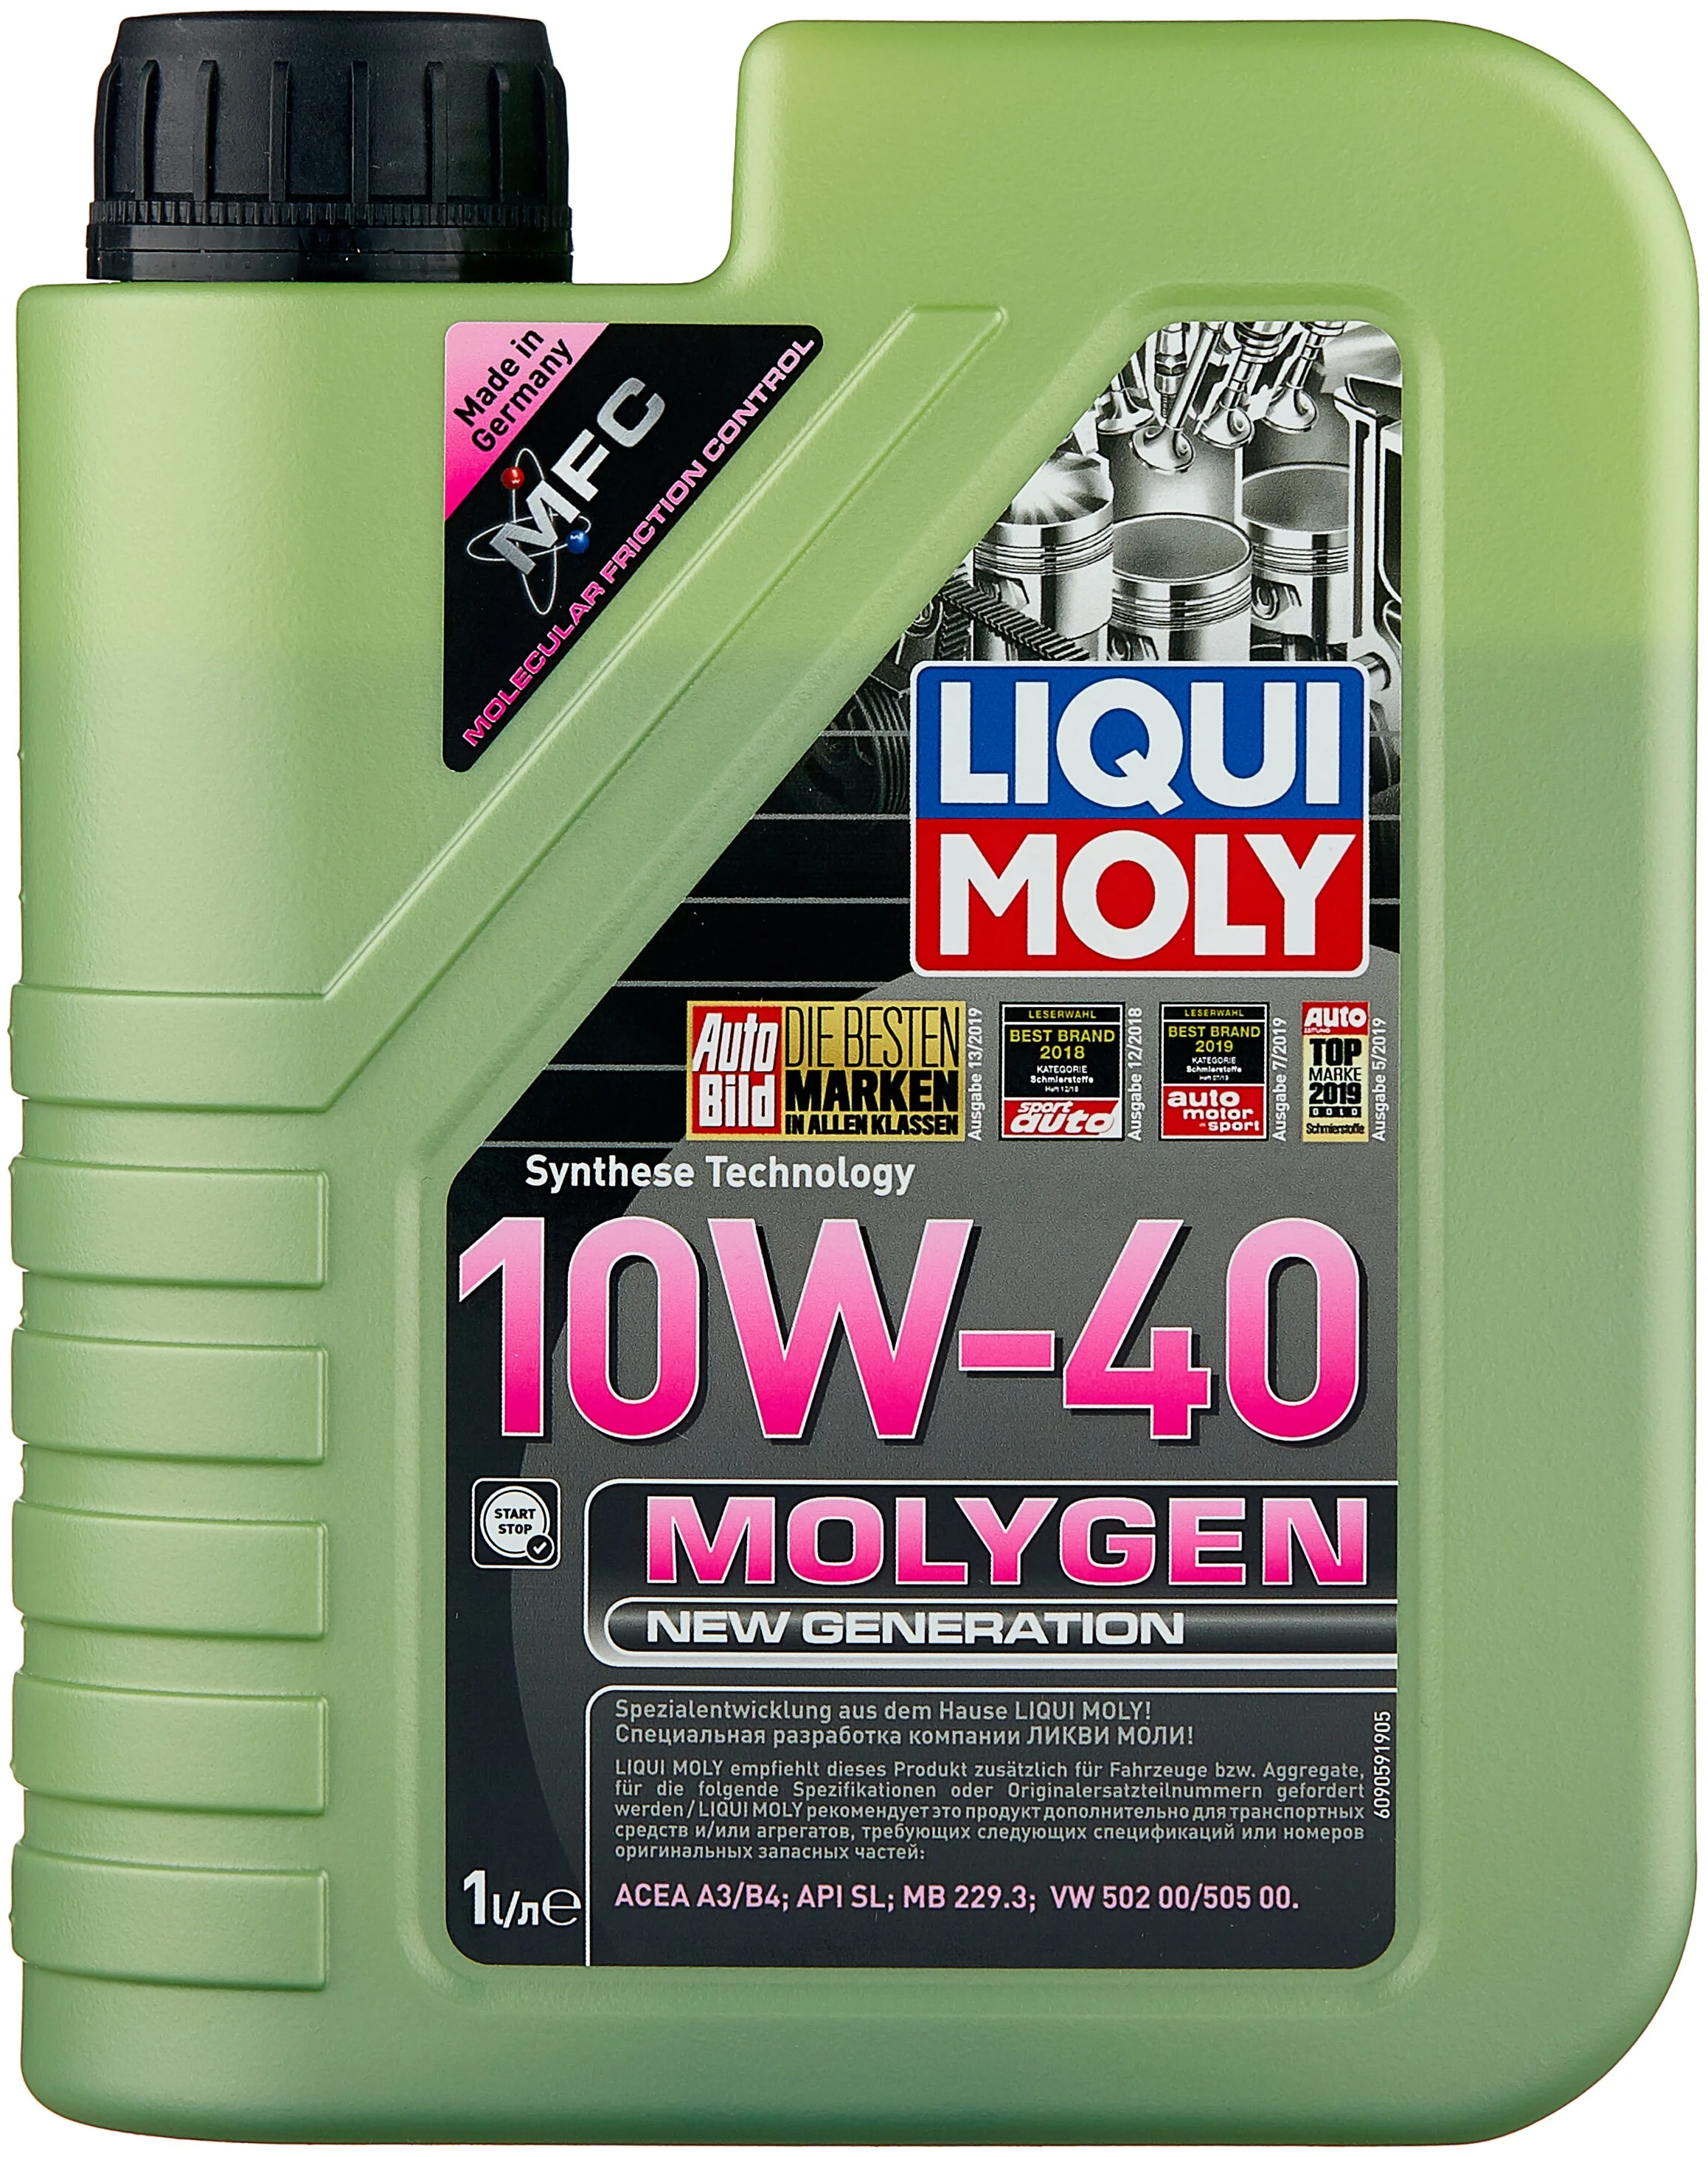 LIQUI MOLY Molygen New Generation 10W-40 - класс вязкости: 10W-40